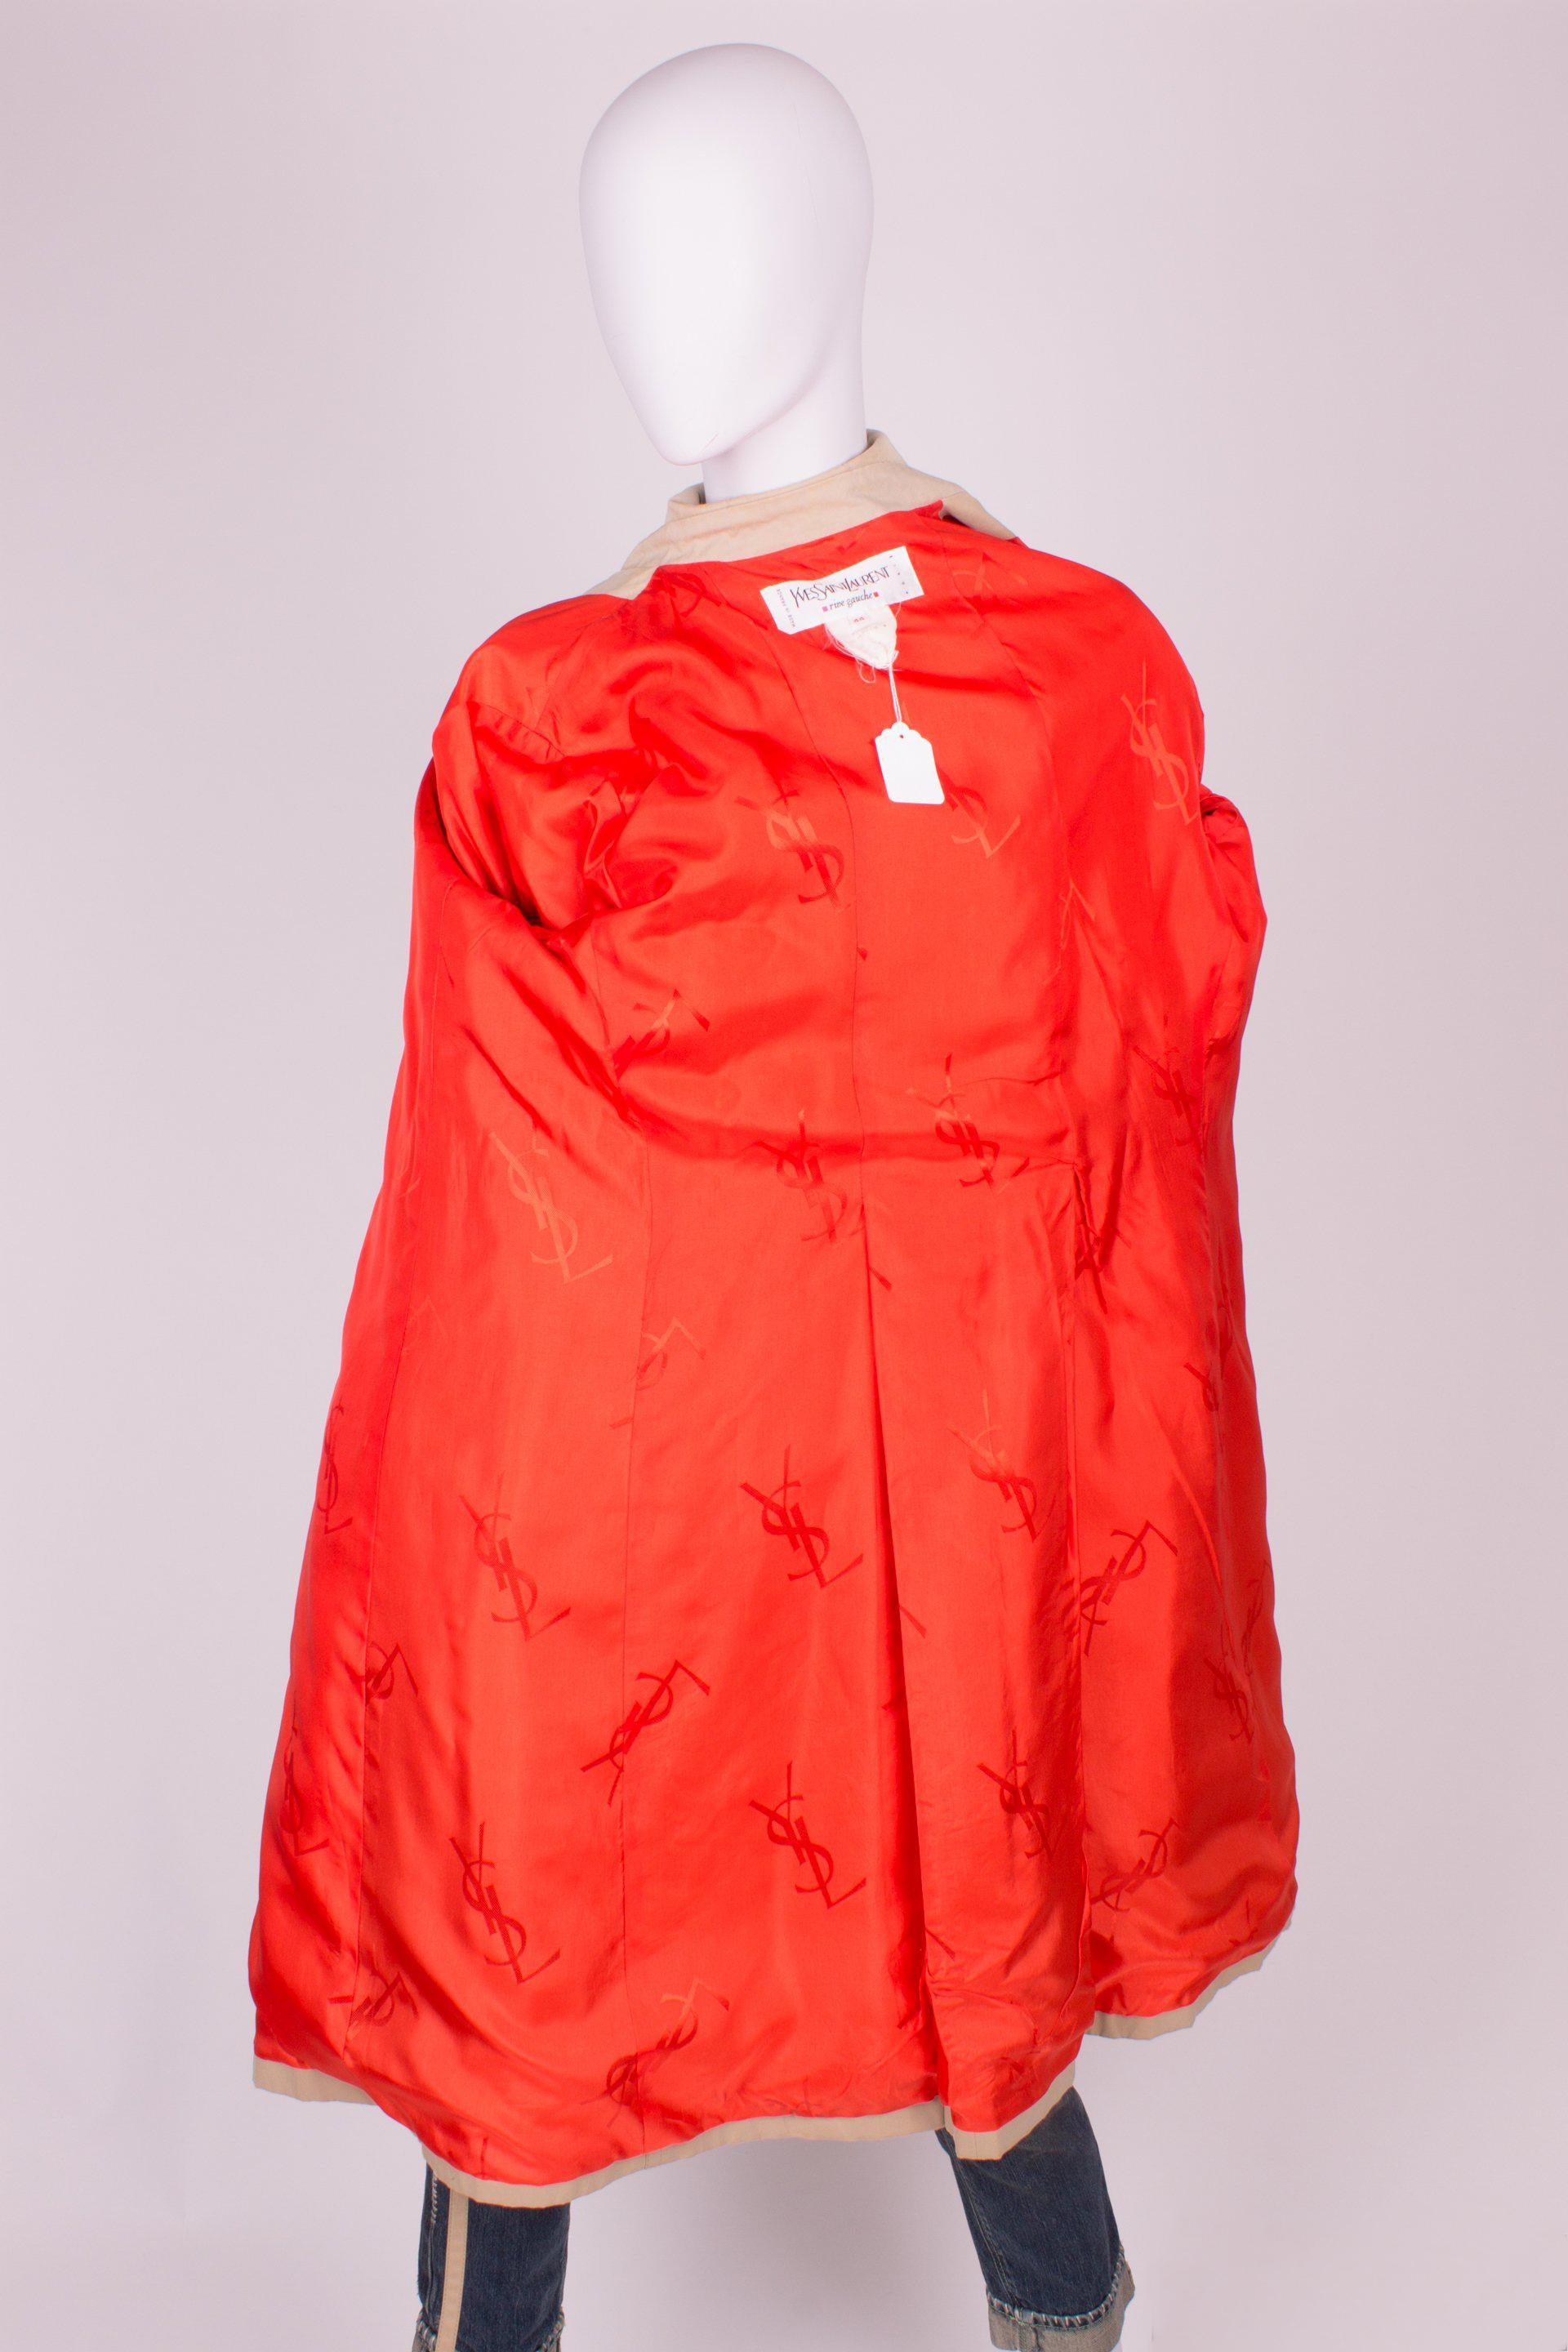 Women's Yves Saint Laurent Rive Gauche Trenchcoat For Sale